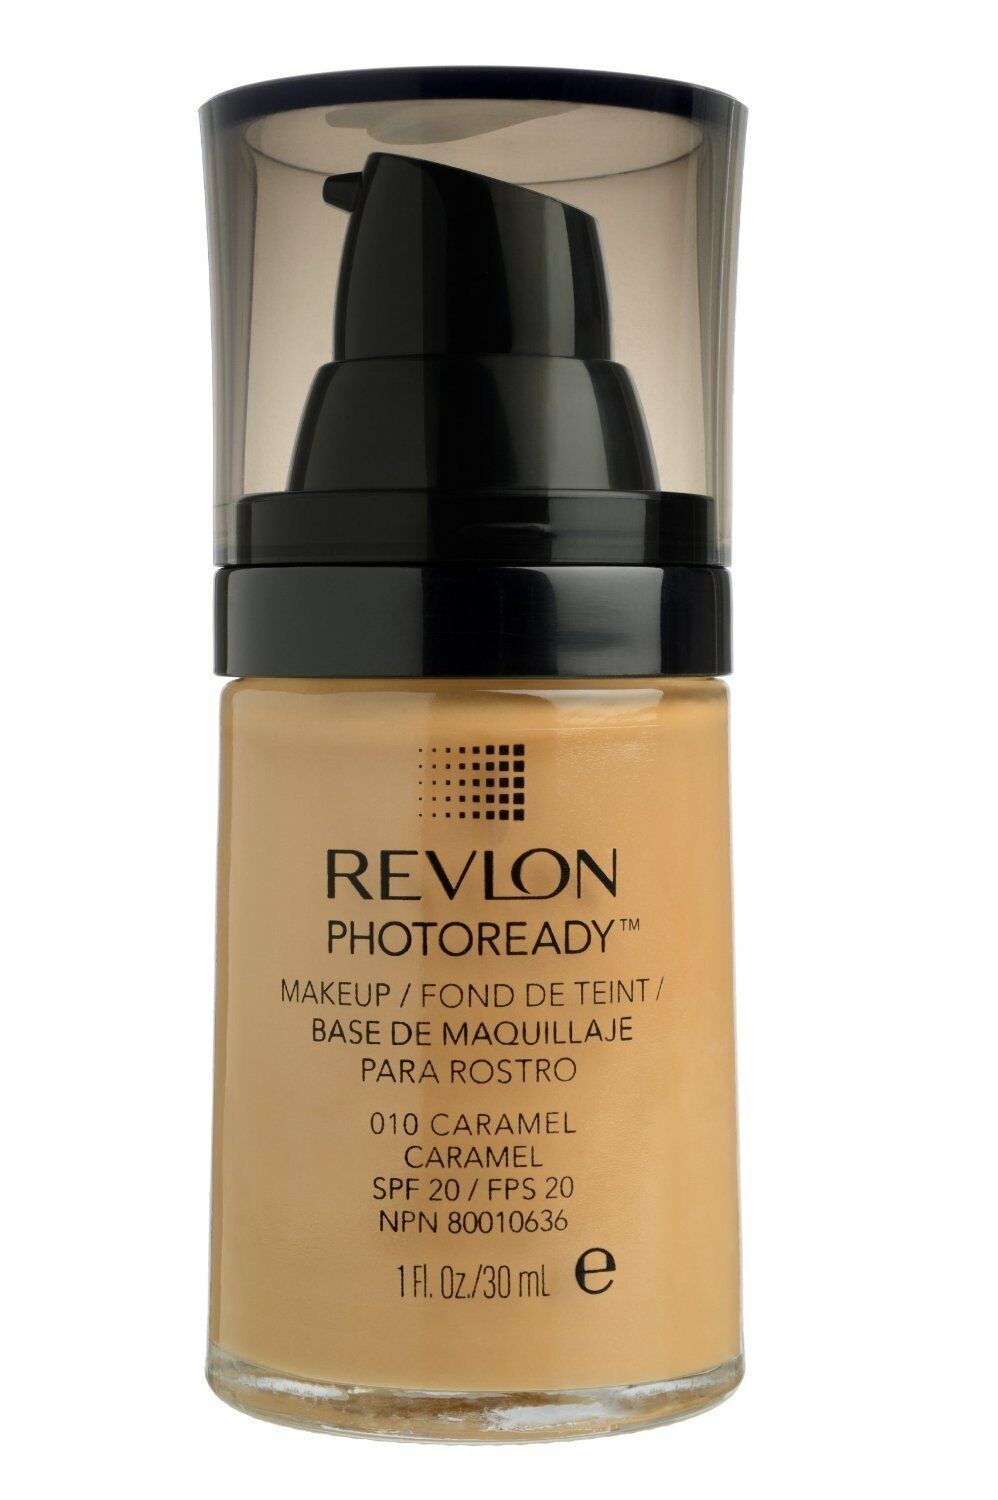 Revlon Photoready Makeup SPF 20 Foundation and 42 similar items